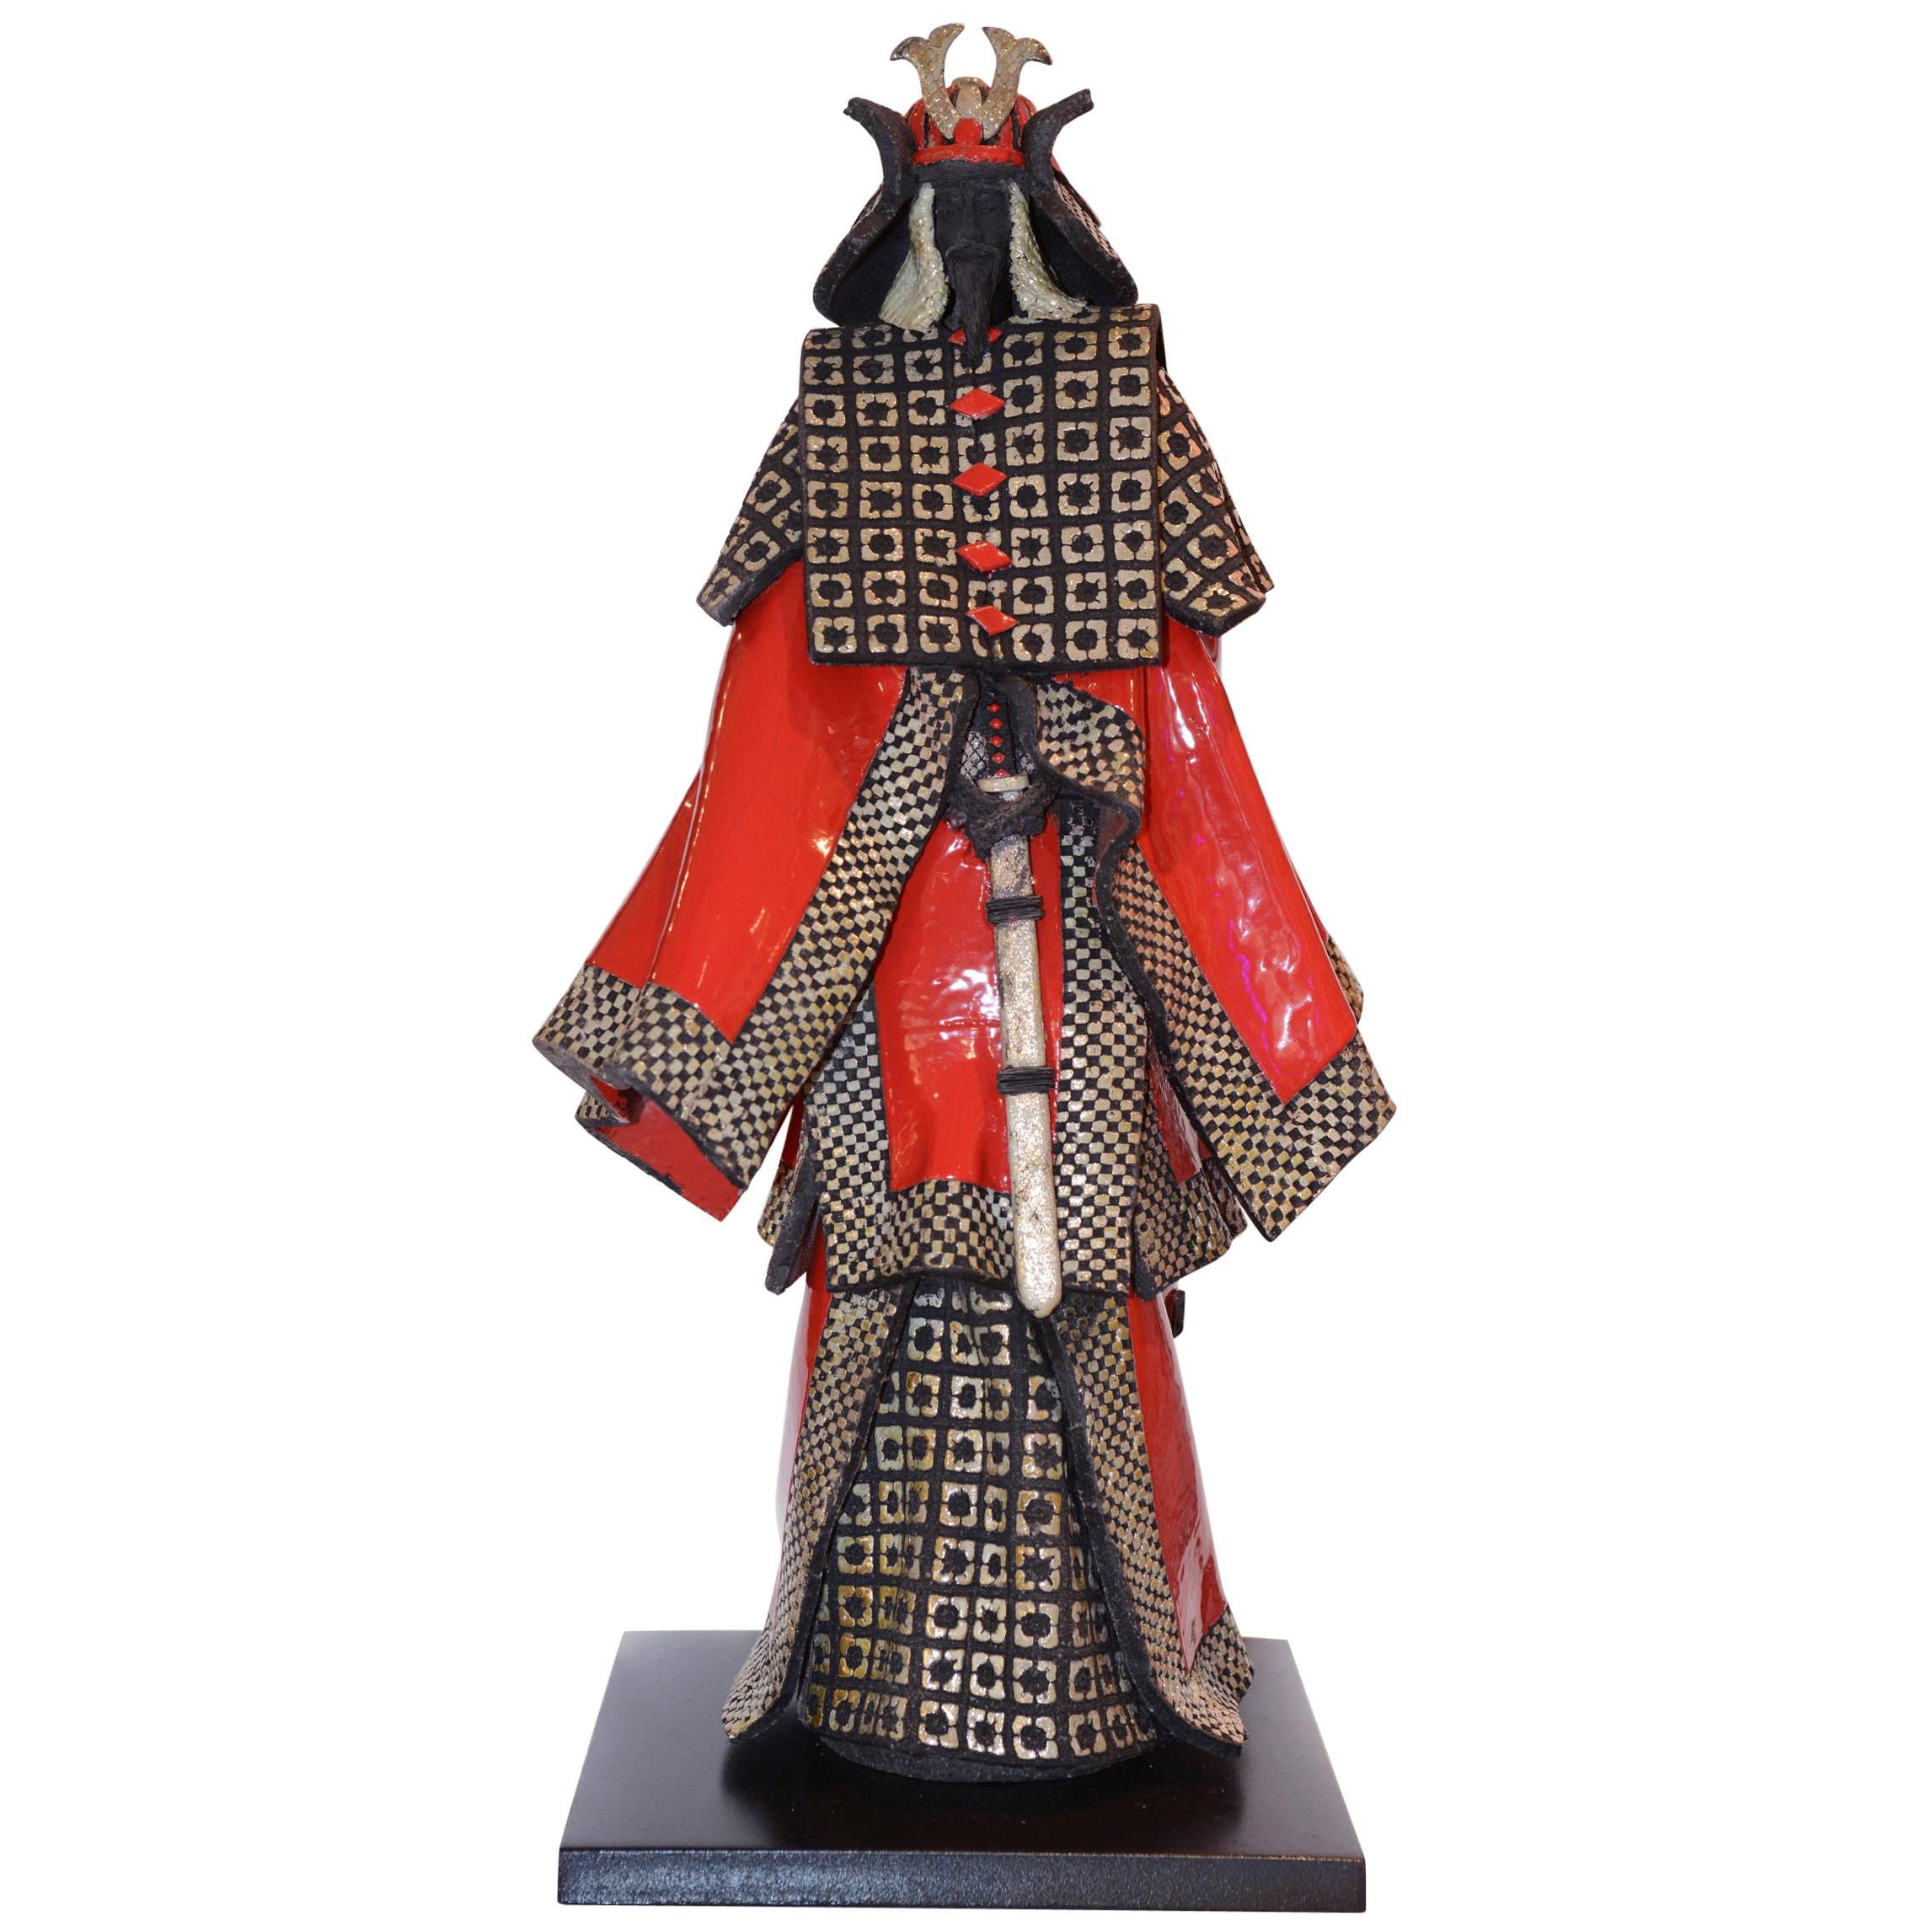 Samurai Raku Red and Silver Sculpture For Sale